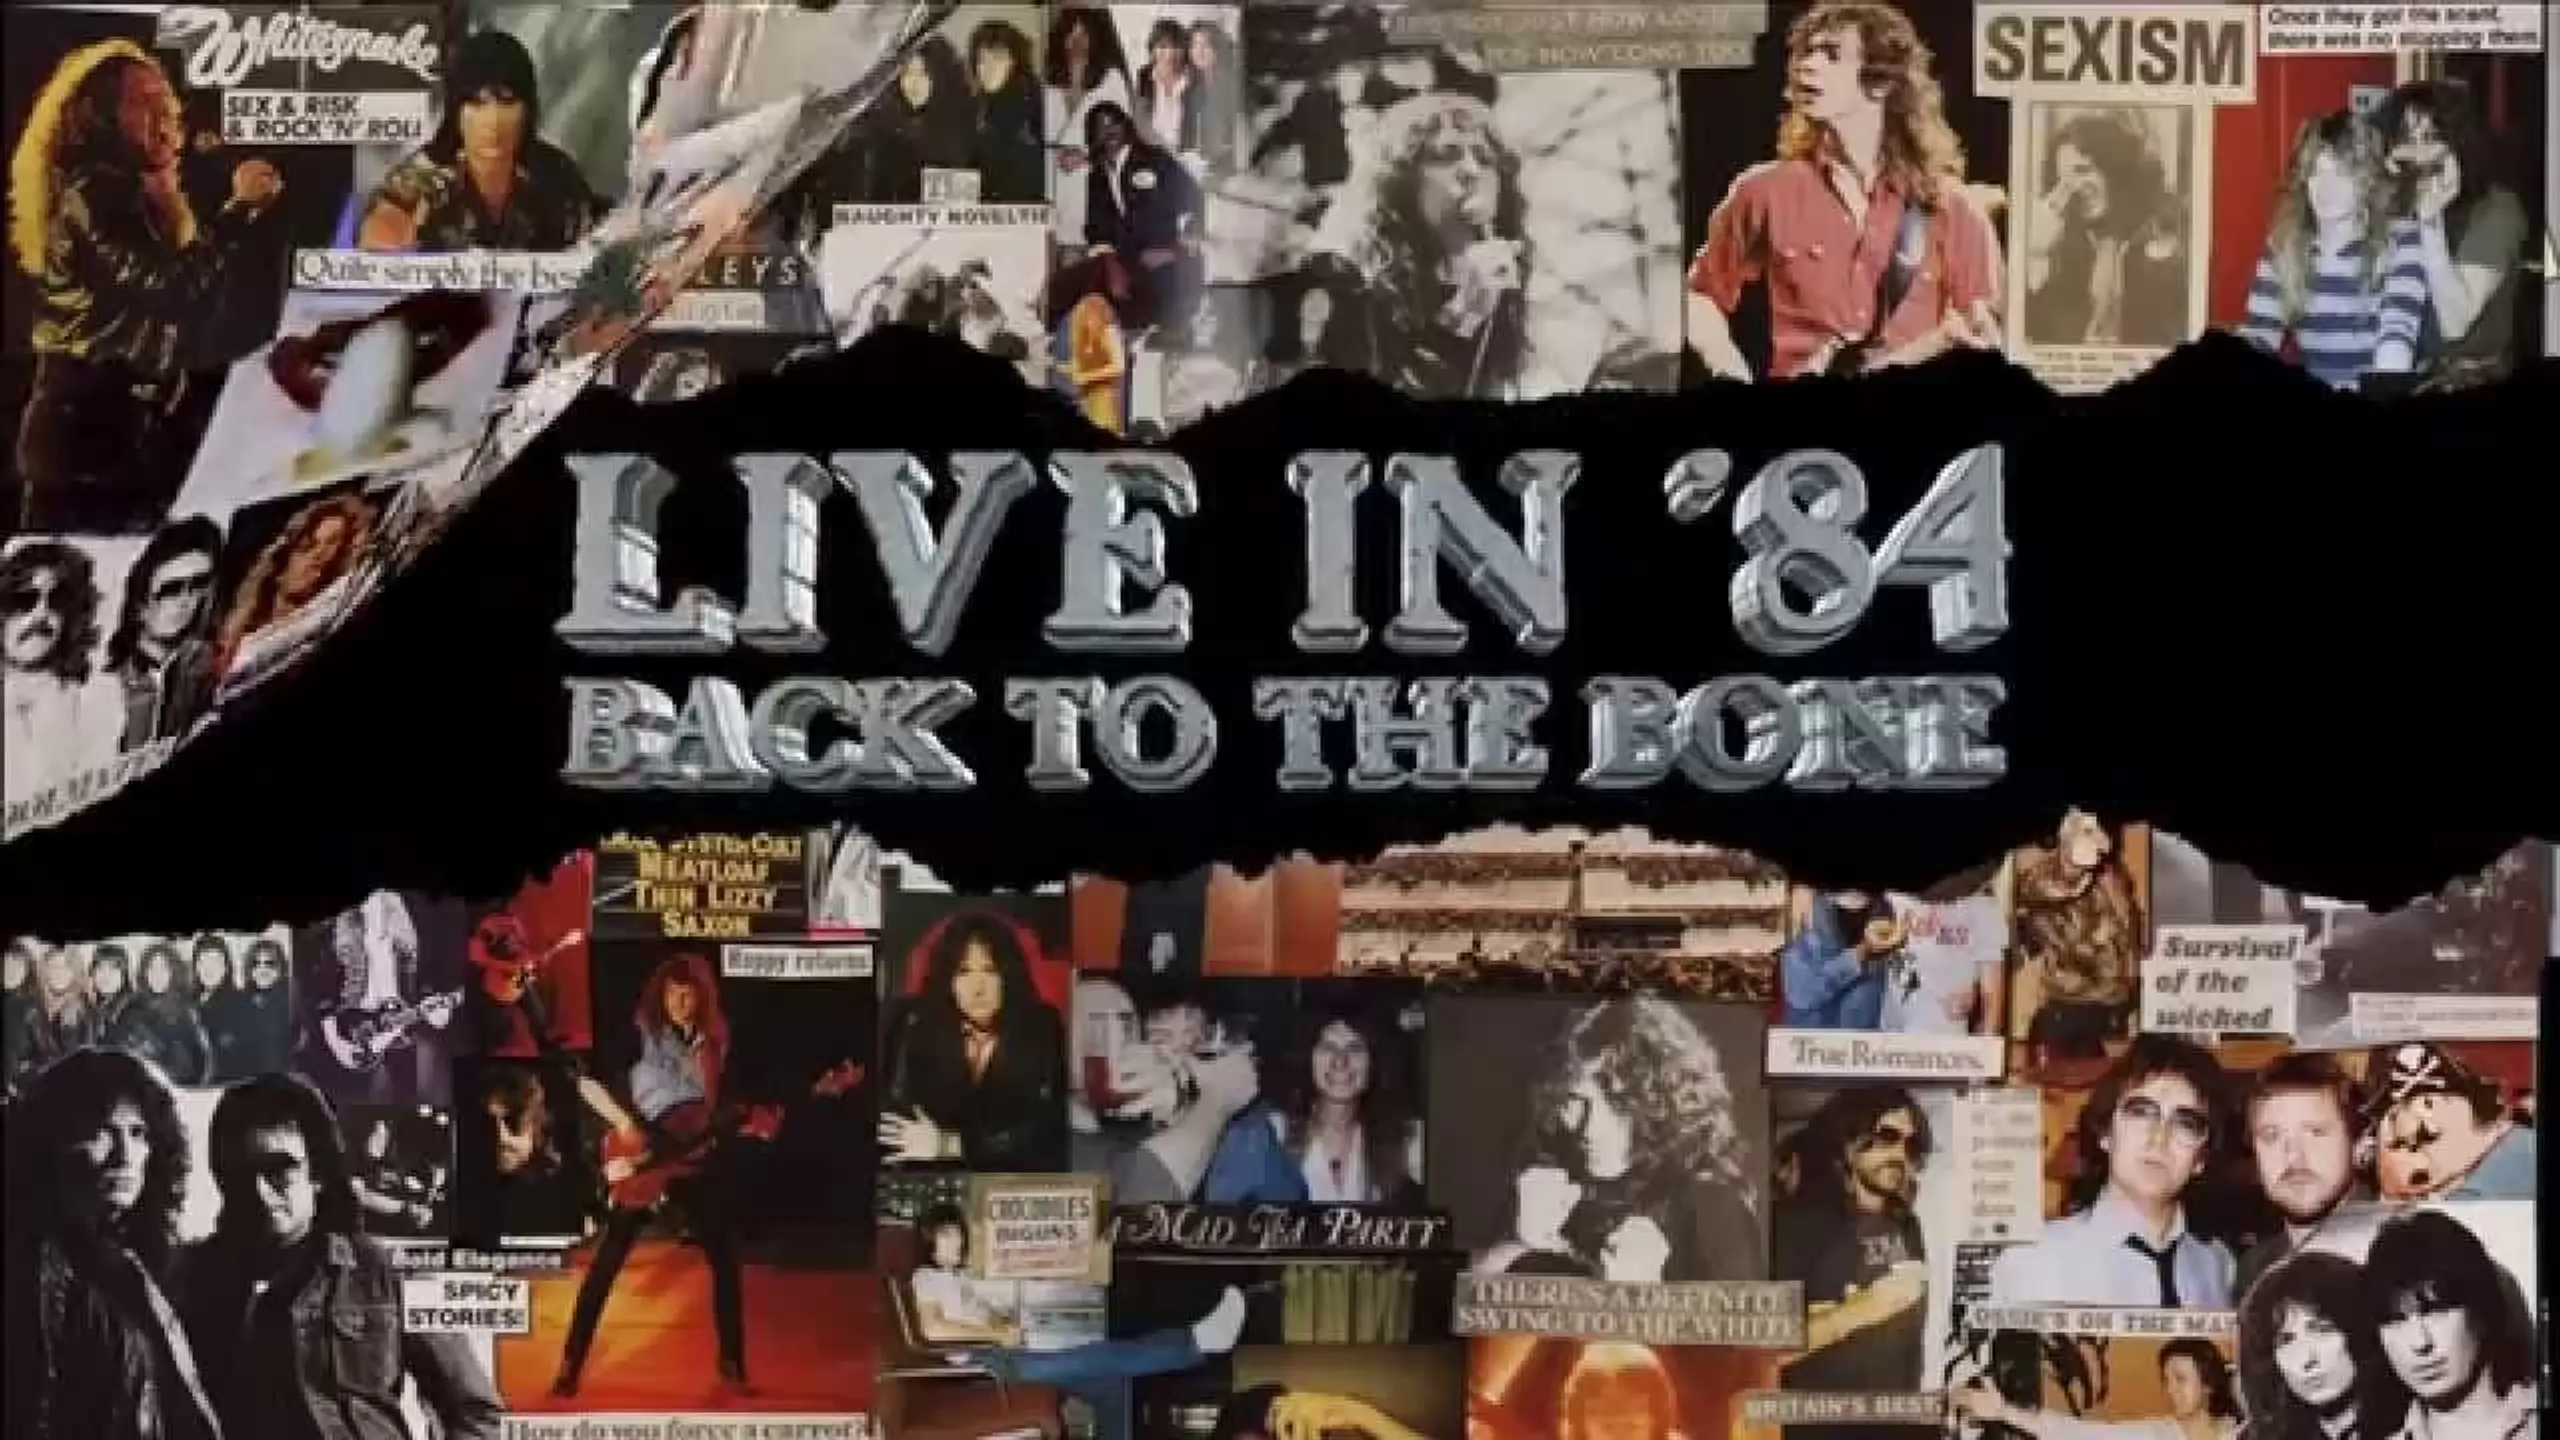 Whitesnake: Live in '84 - Back to the Bone